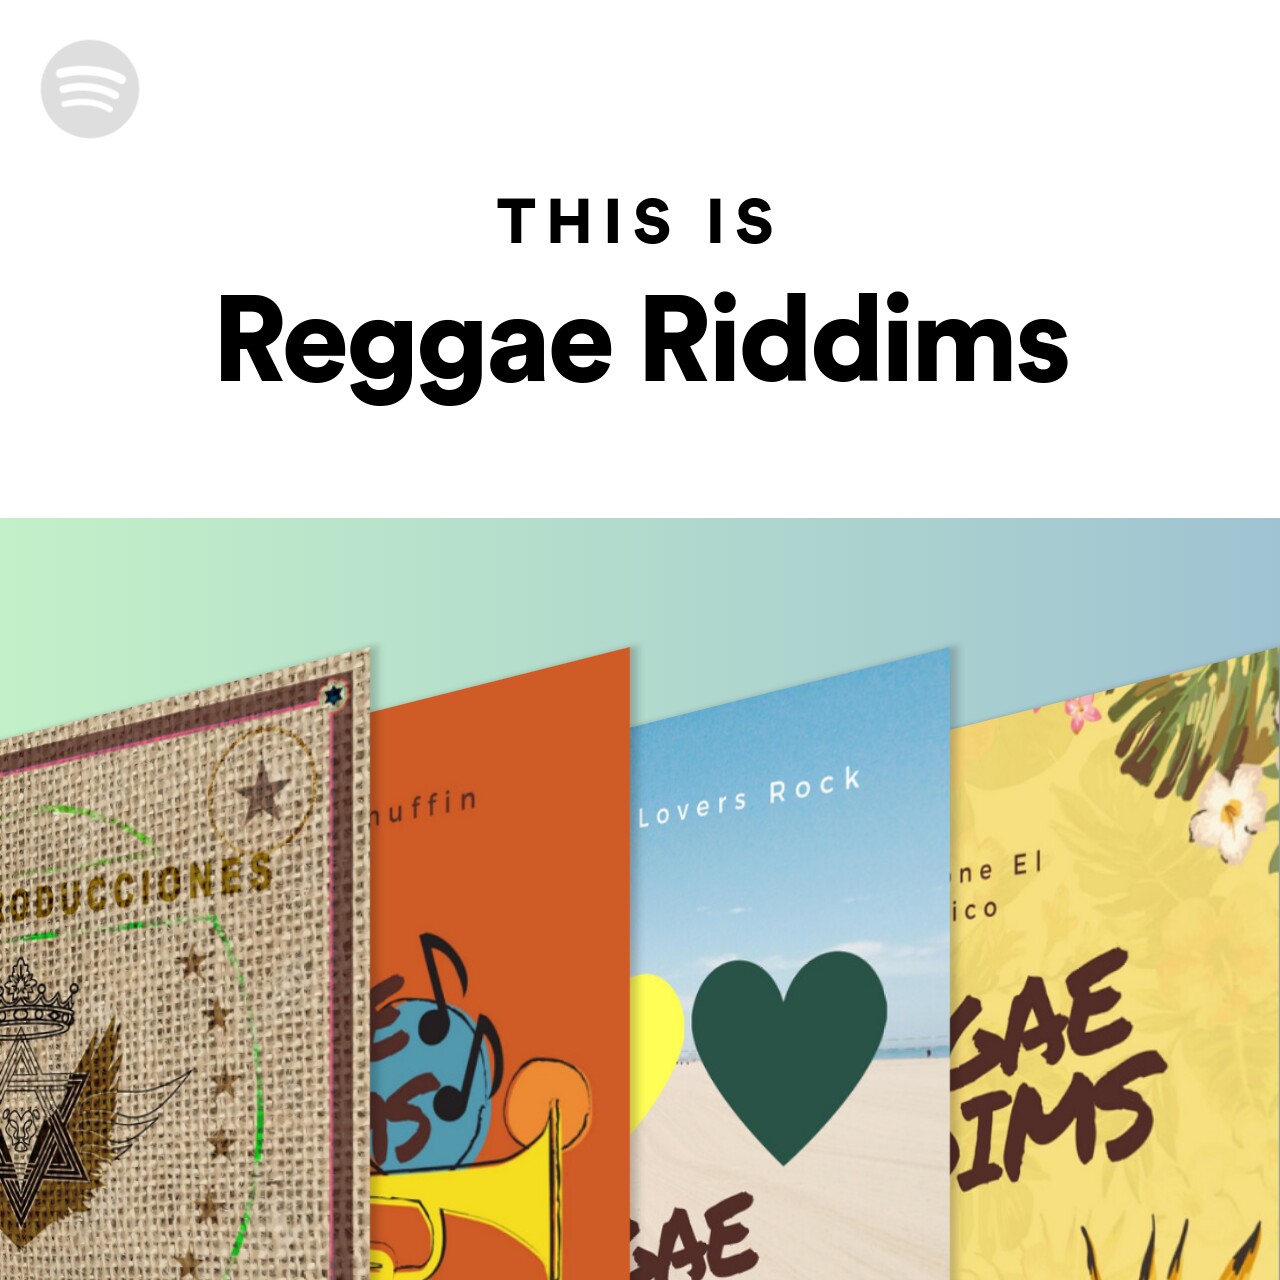 This Is Reggae Riddims Spotify Playlist